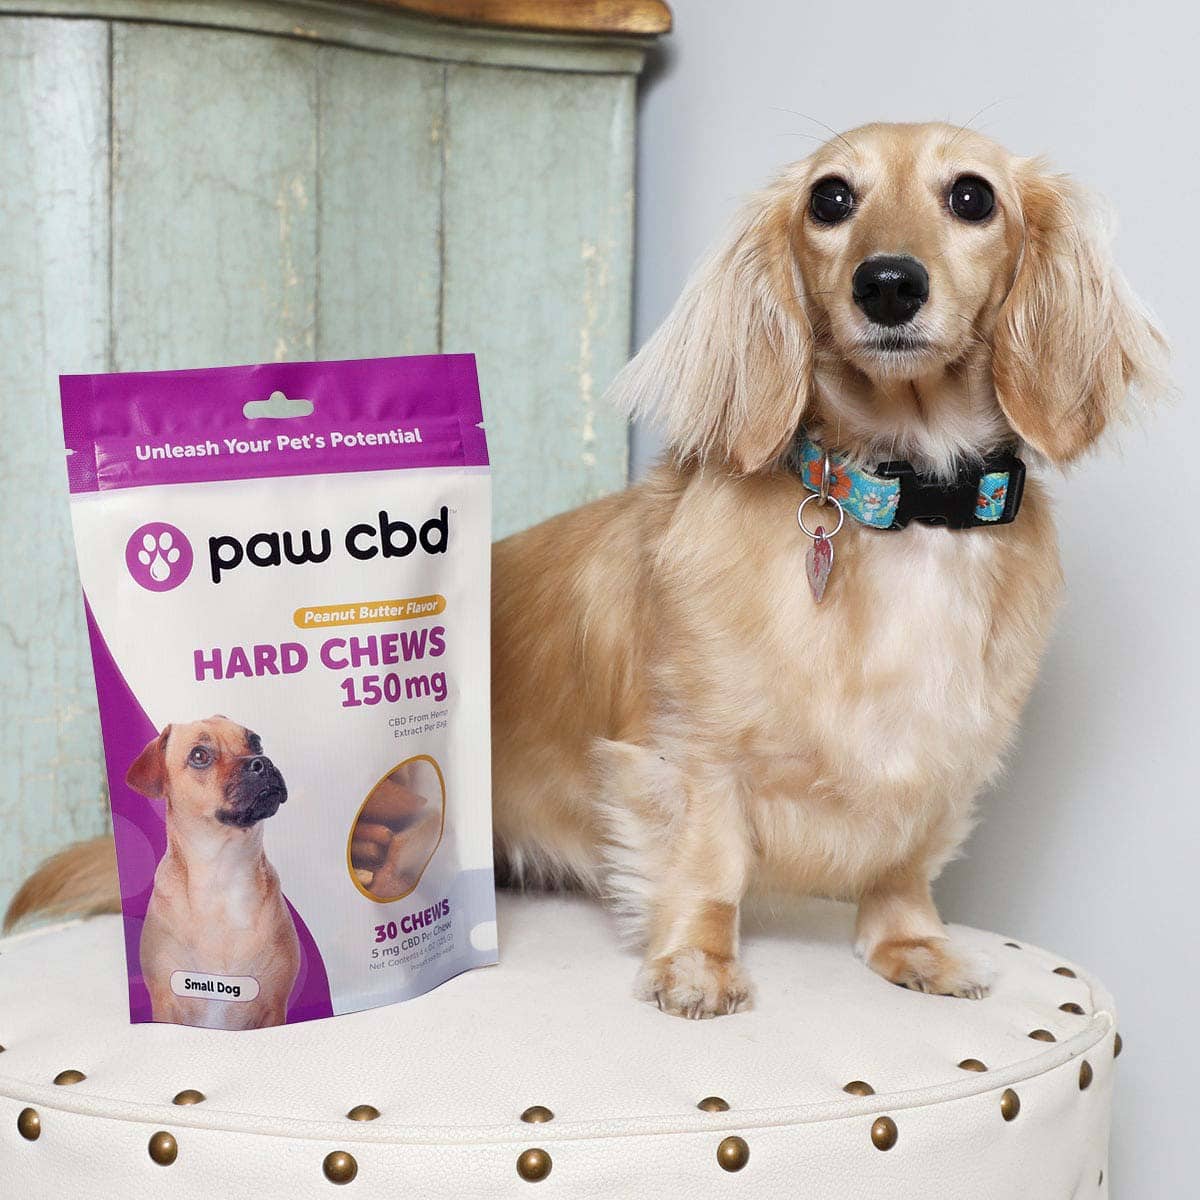 Paw CBD, Pet CBD Oil Hard Chews for Small Dogs, Peanut Butter, Broad Spectrum THC-Free, 30ct, 150mg CBD